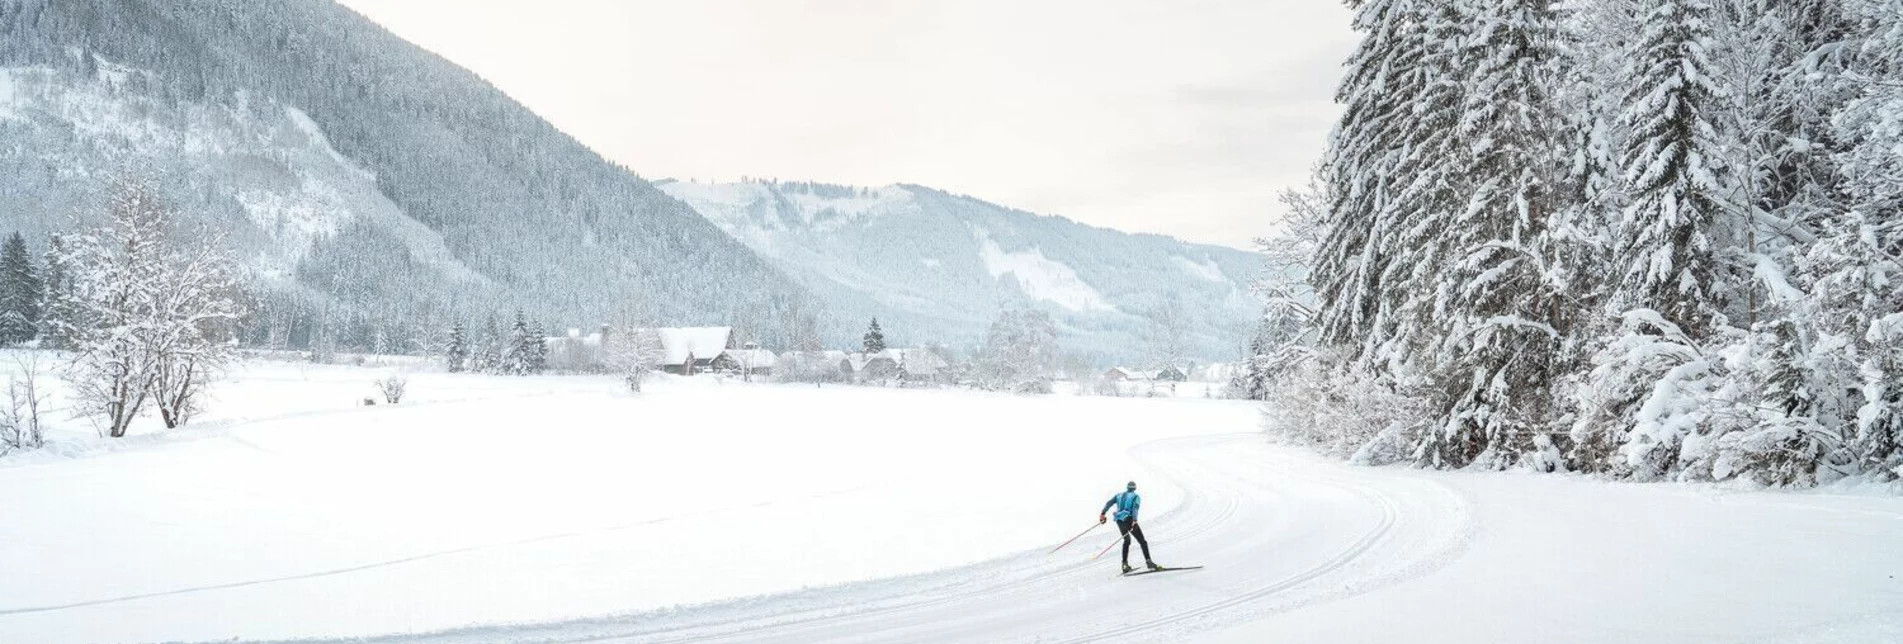 Ski-nordic-classic Pyhrn Loipe - Touren-Impression #1 | © TV Gesäuse